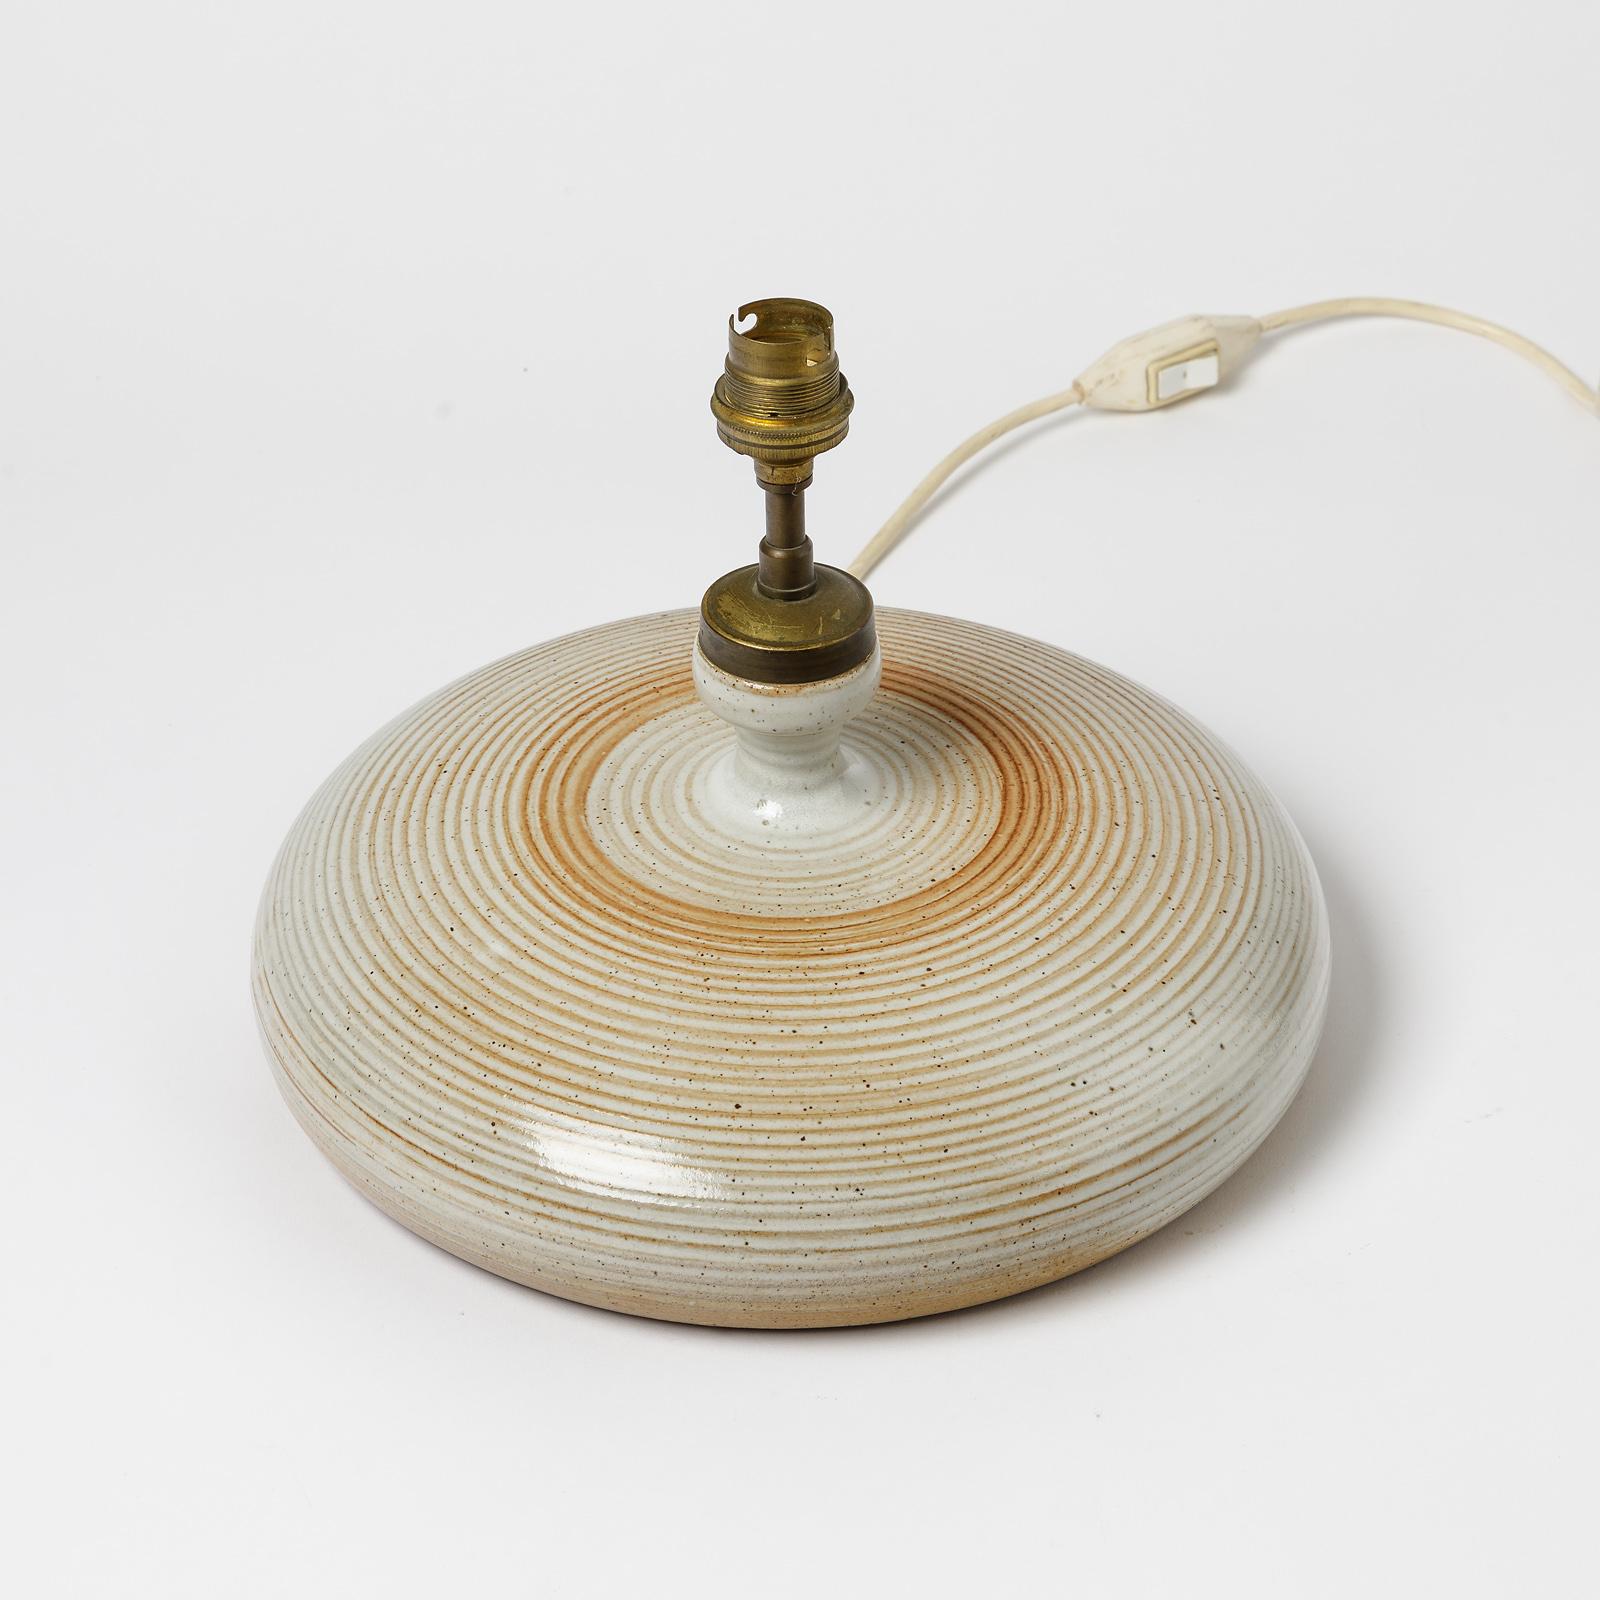 Beaux Arts Ceramic Table Lamp Attributed to La Borne Potters, circa 1960-1970